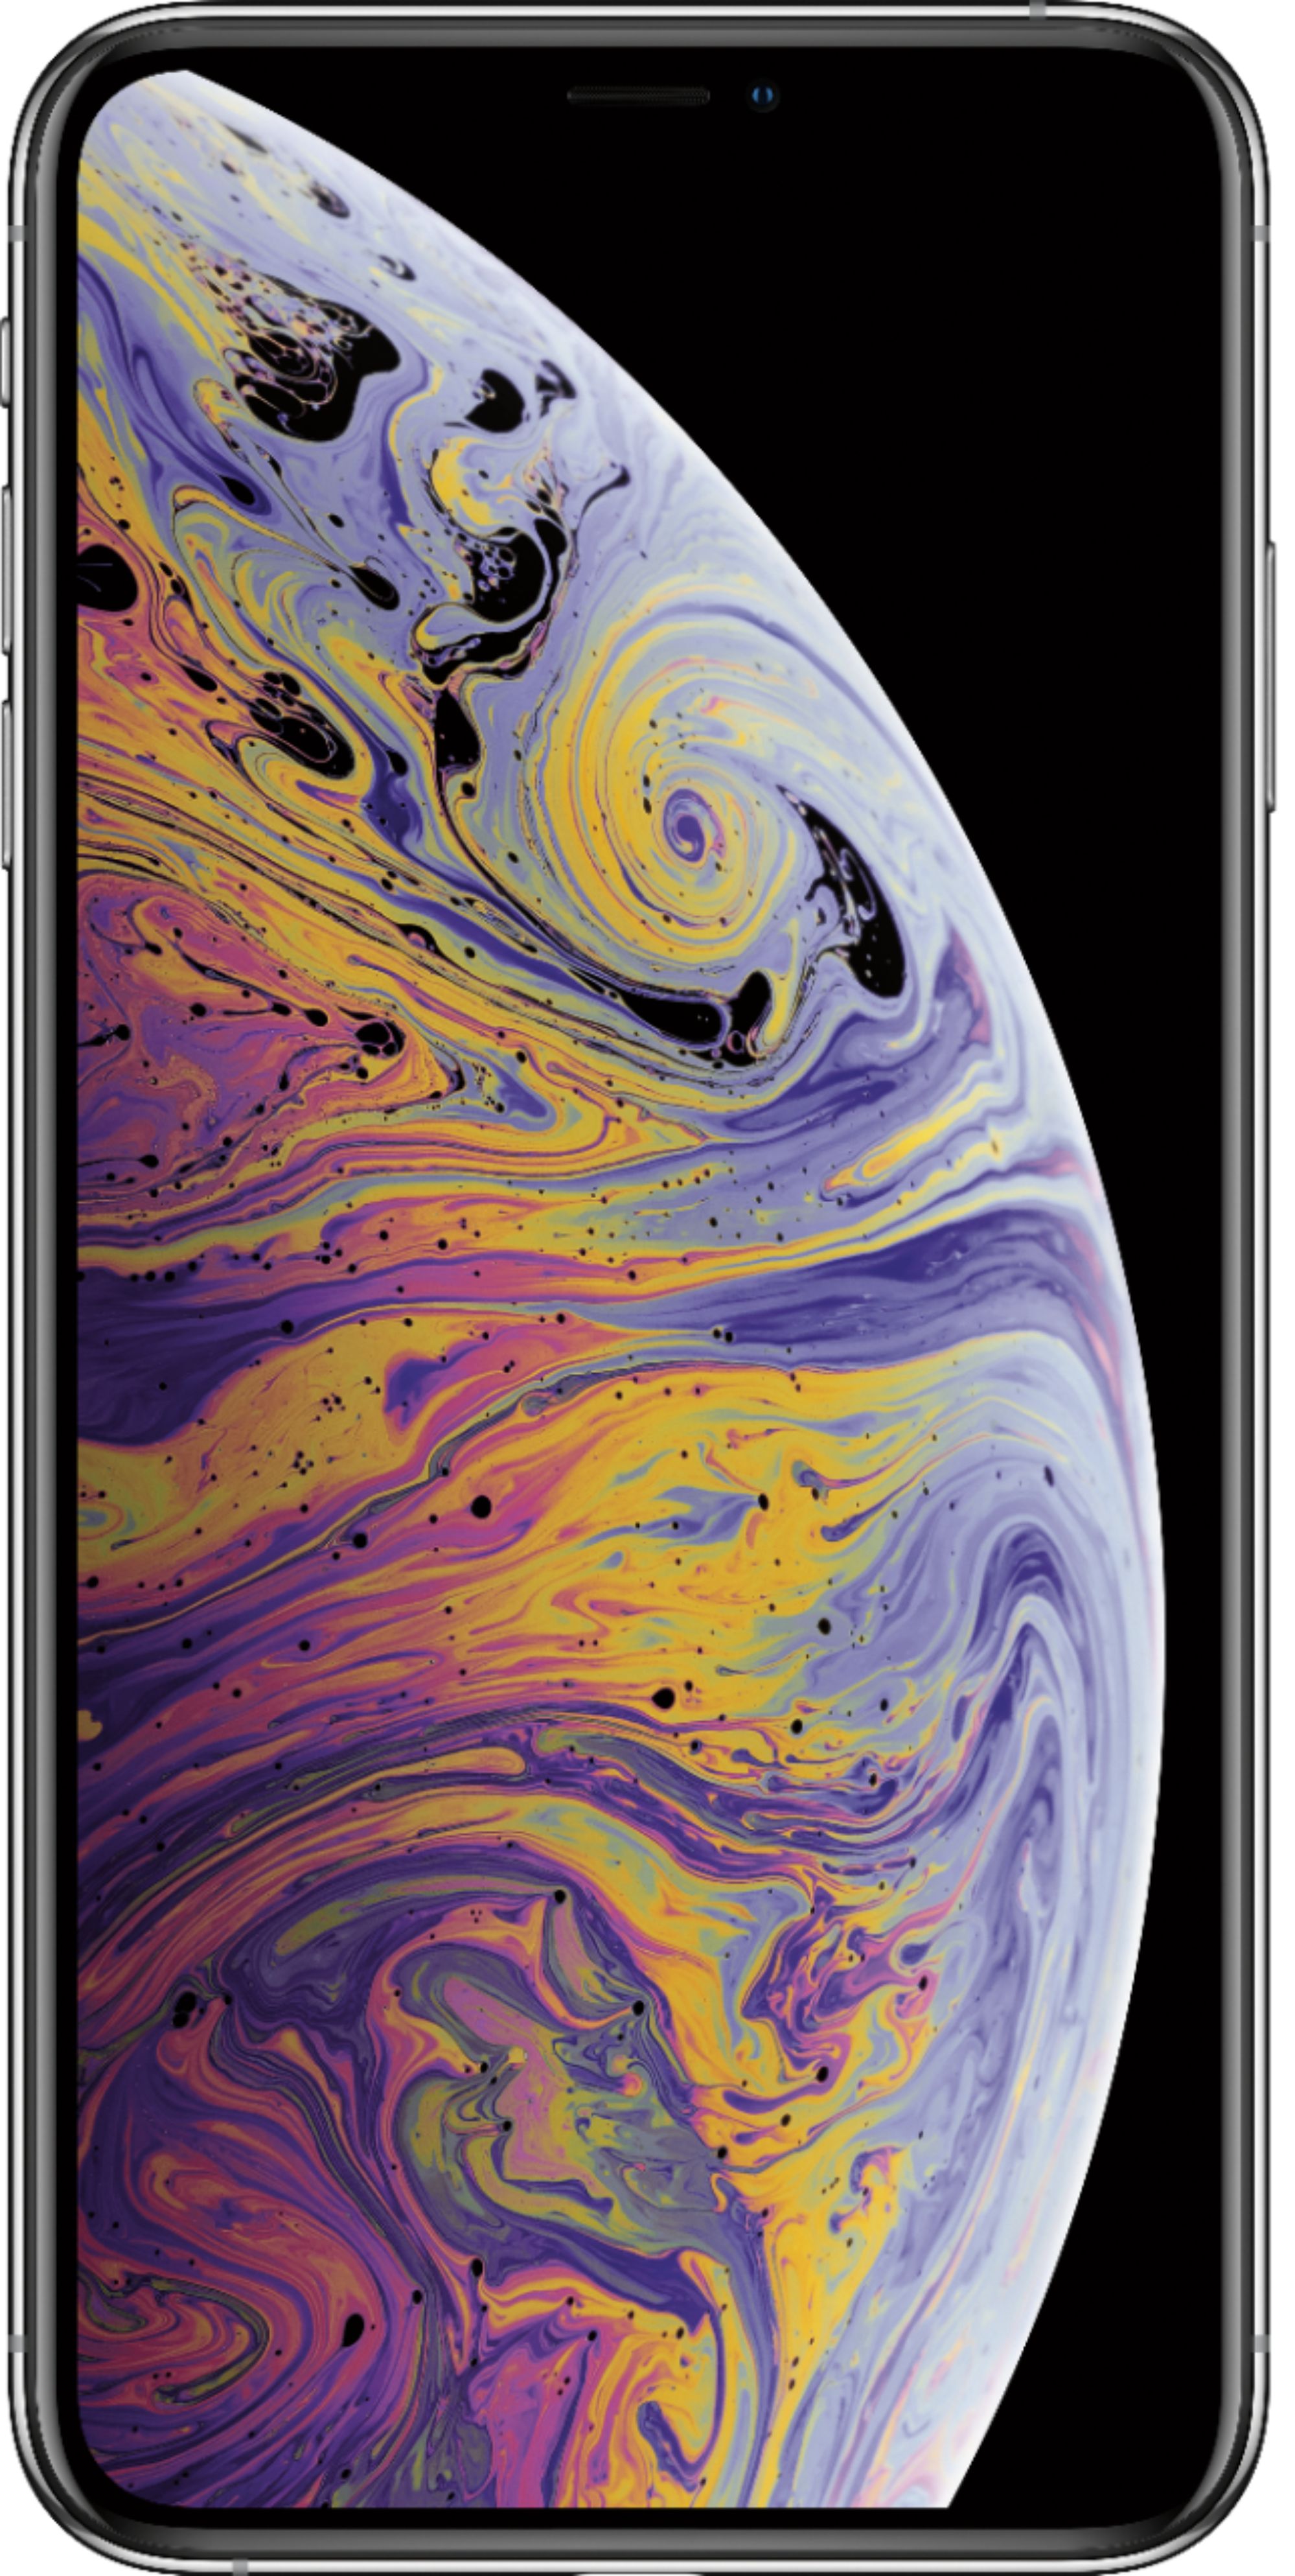 Apple Iphone Xs Max 256gb Silver Verizon Mt5e2ll A Best Buy